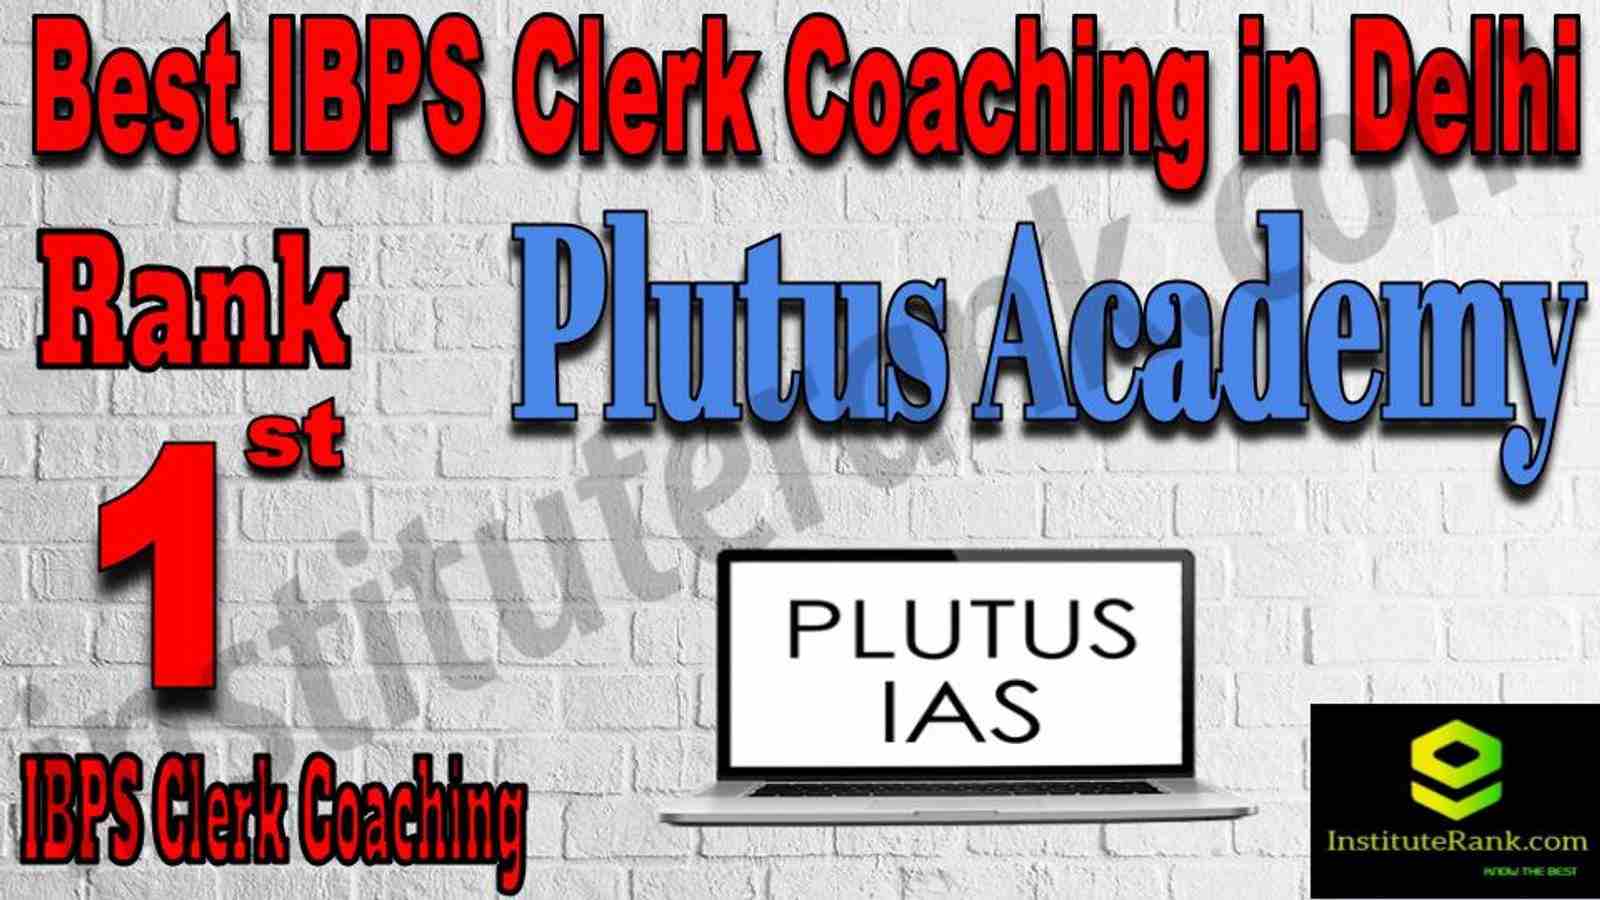 Rank 1 Best IBPS Clerk Coaching in Delhi